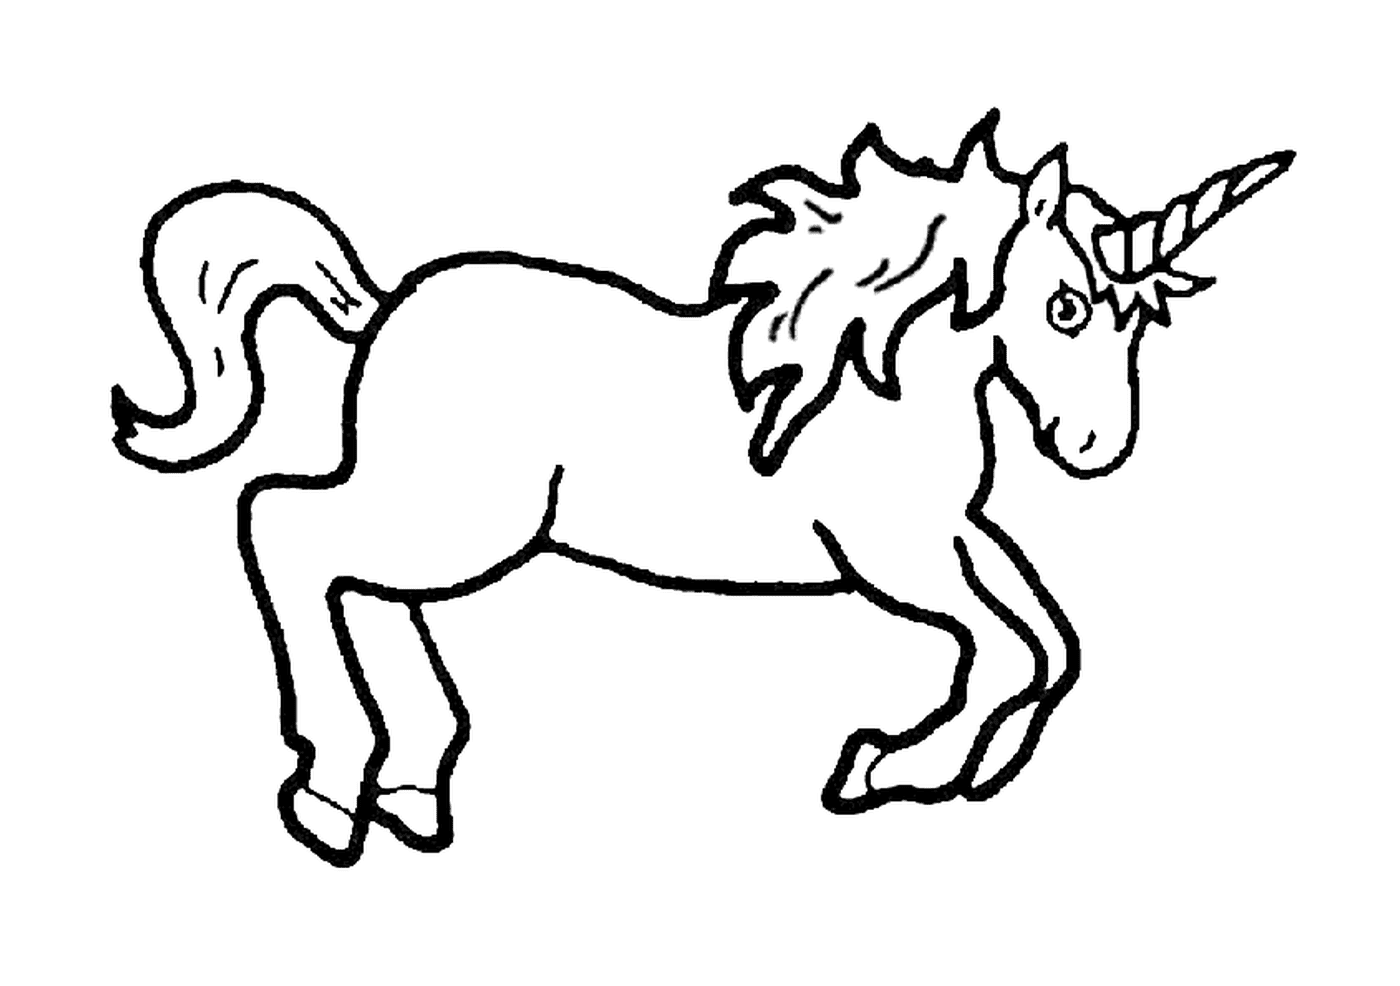  gallop horse, not unicorn 